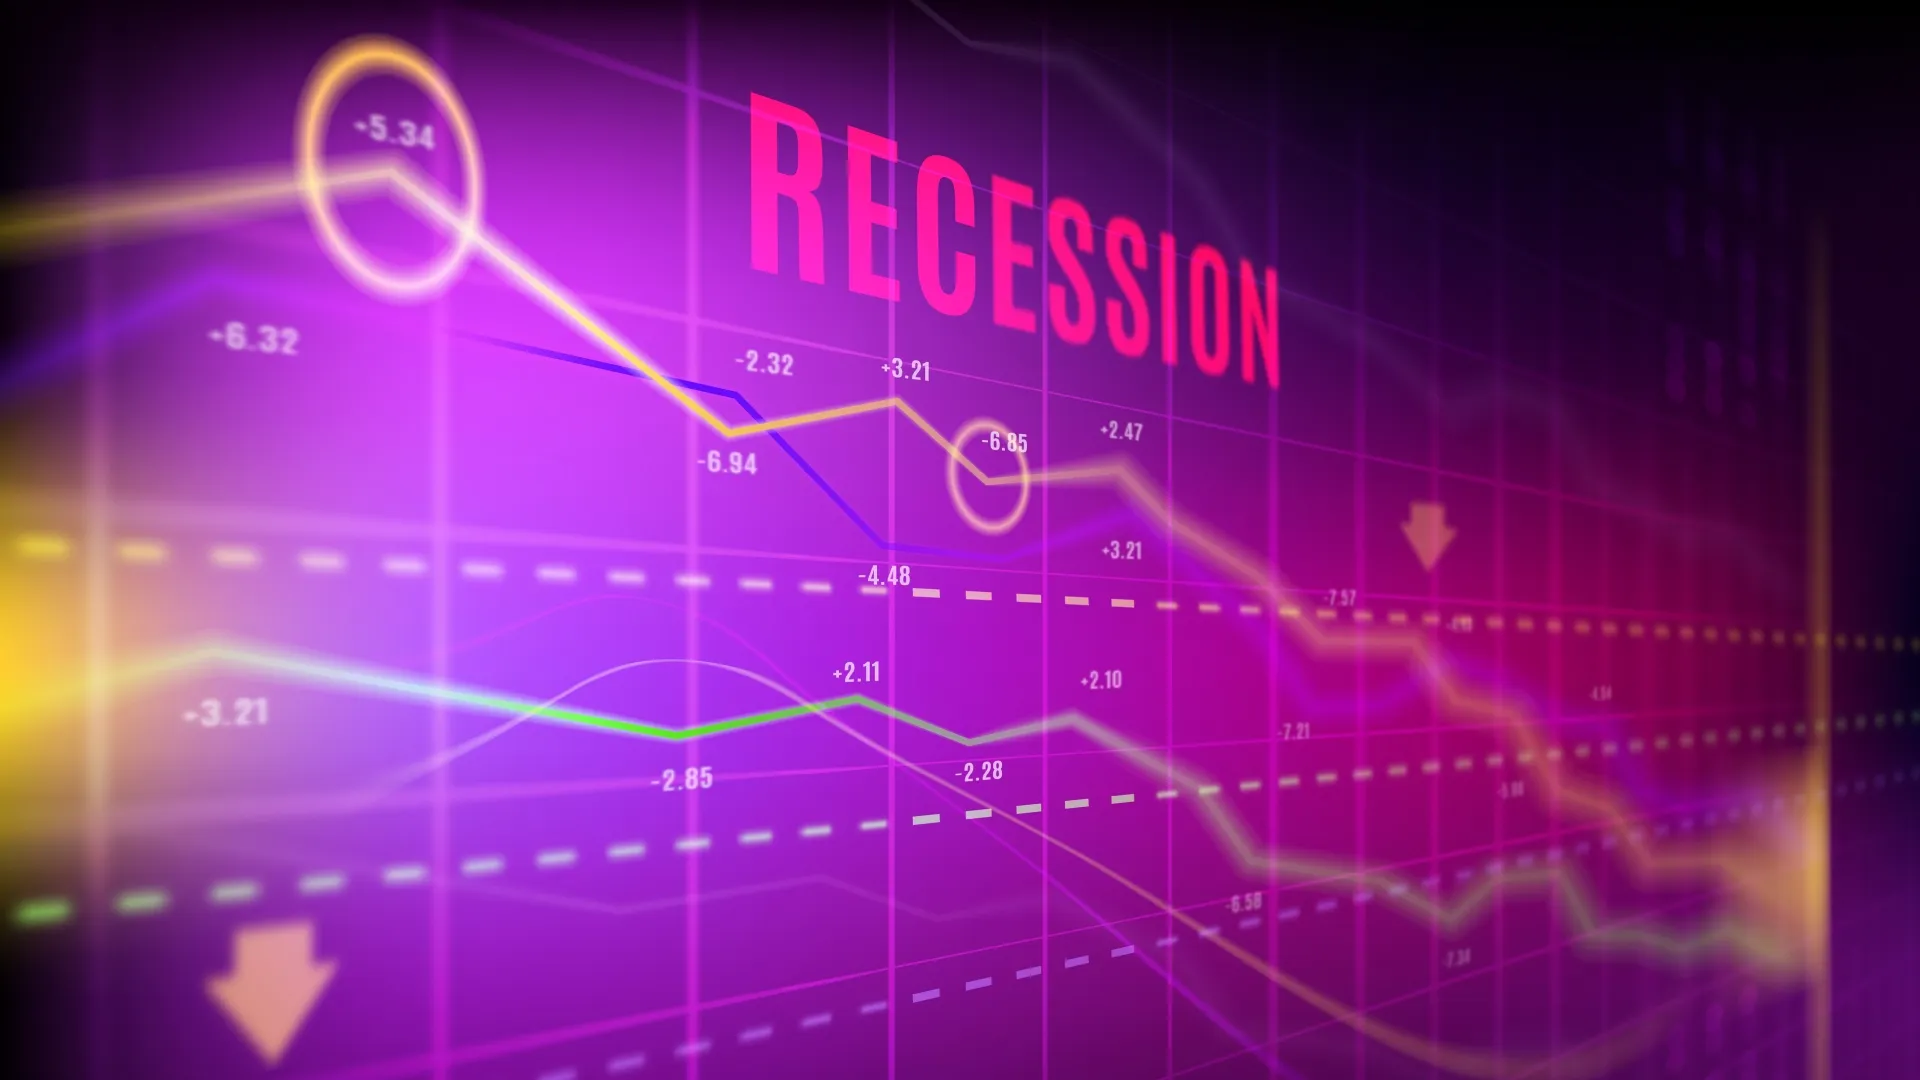 Economics recession, crashed stock market, loss trading, indicators turned down.